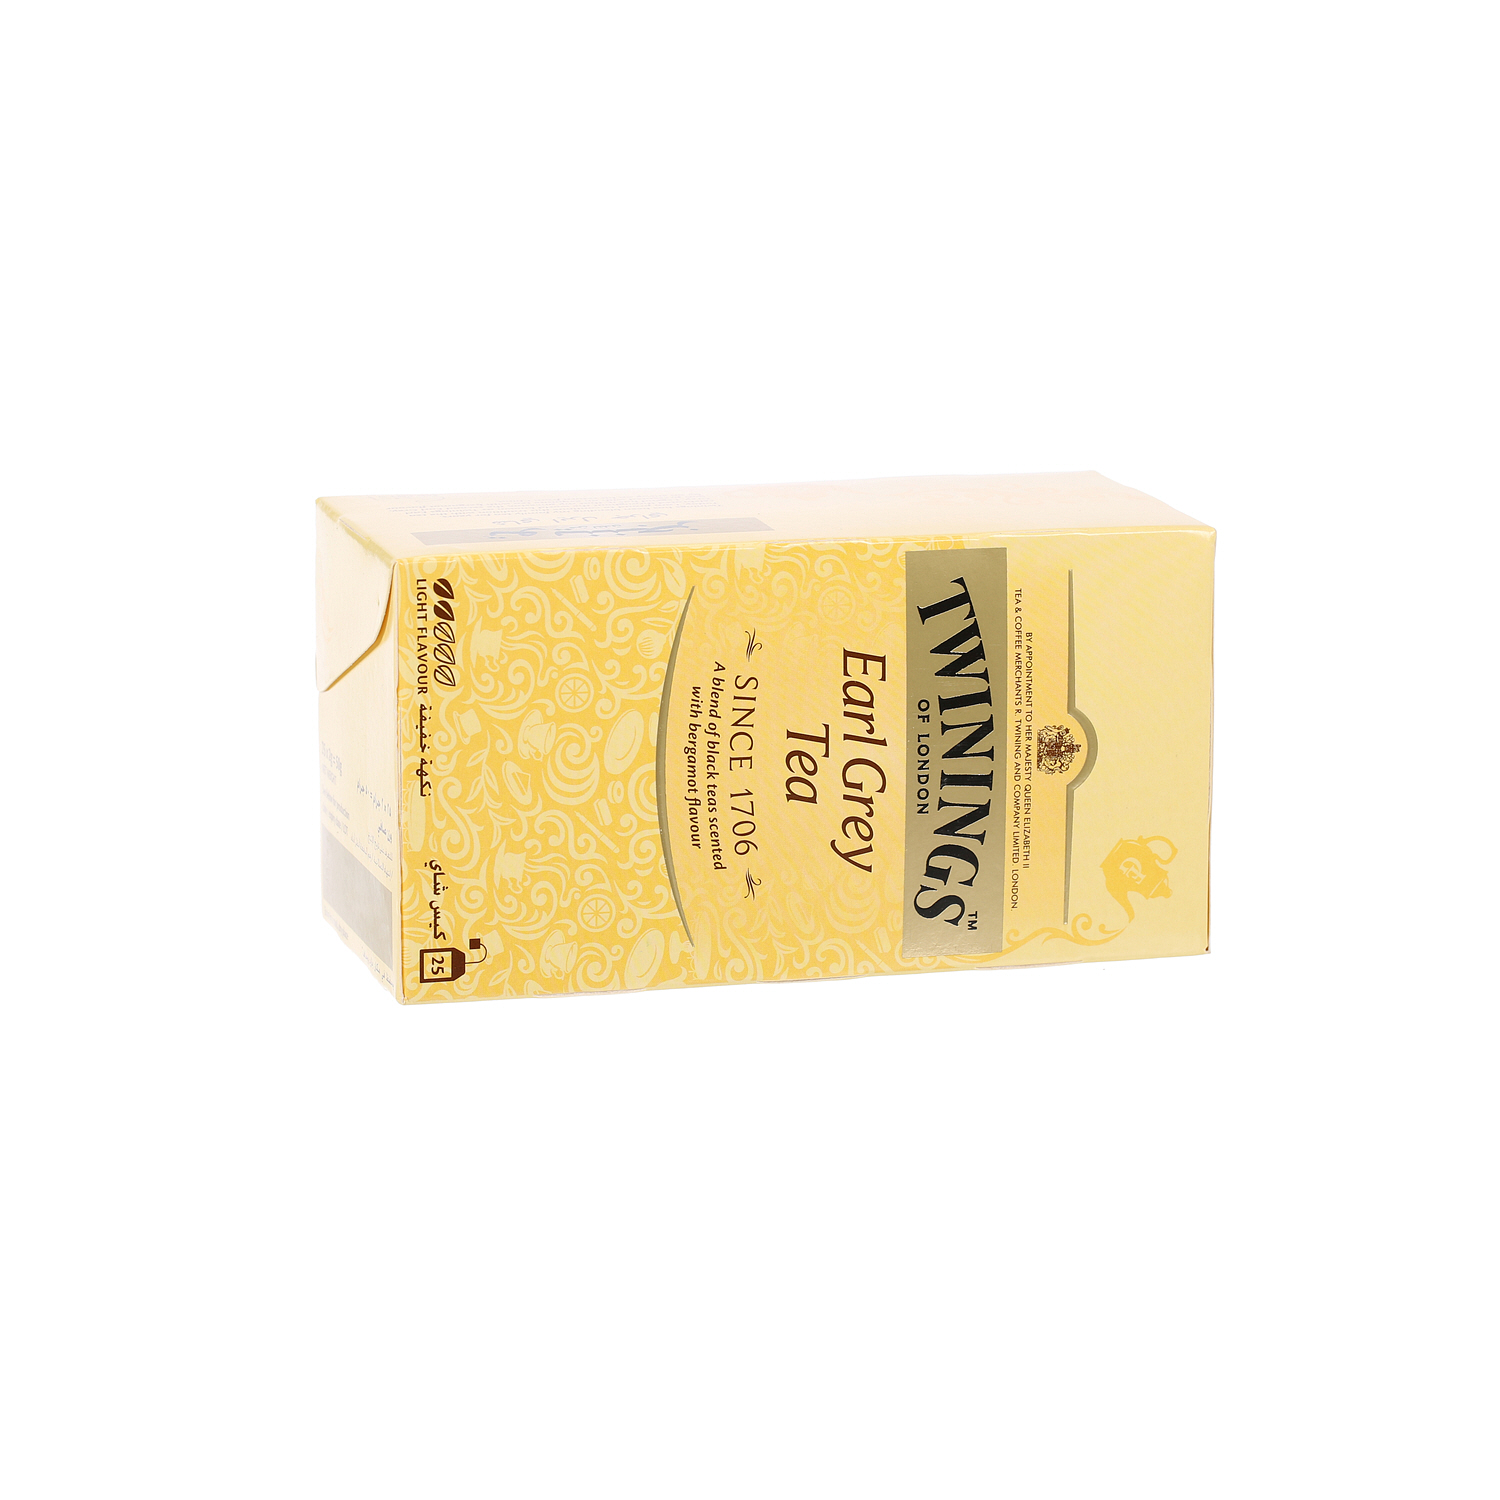 Twinings Goldline Tea Bag Earl Grey 25'S